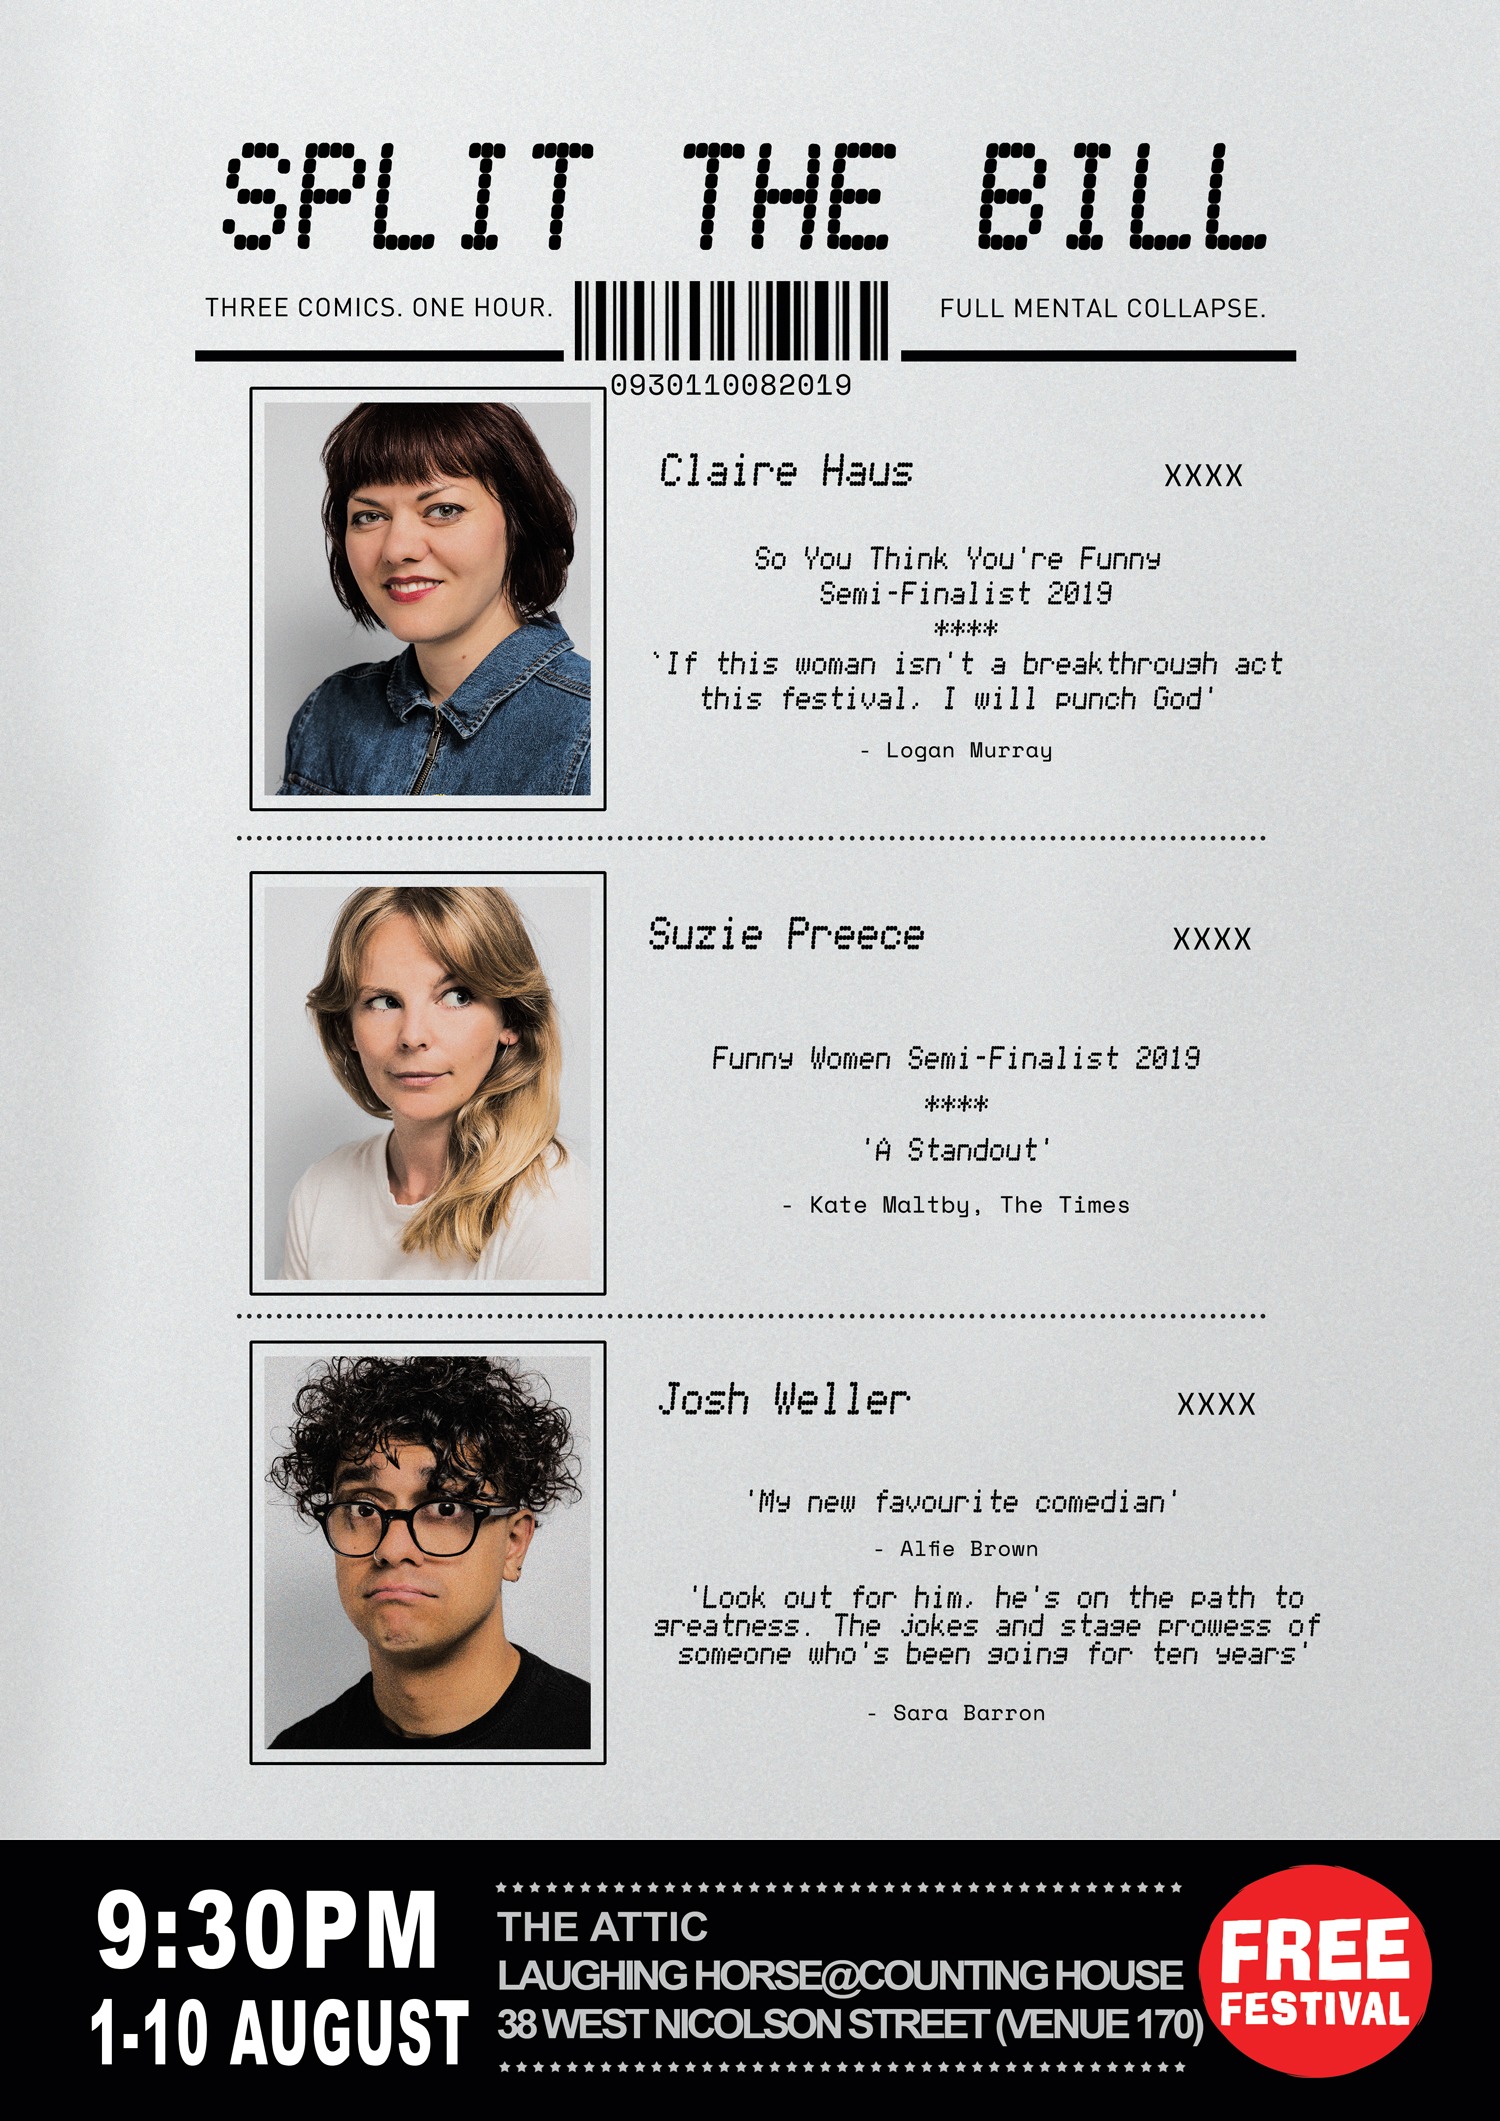 The poster for Split The Bill - Claire Haus, Suzie Preece and Josh Weller